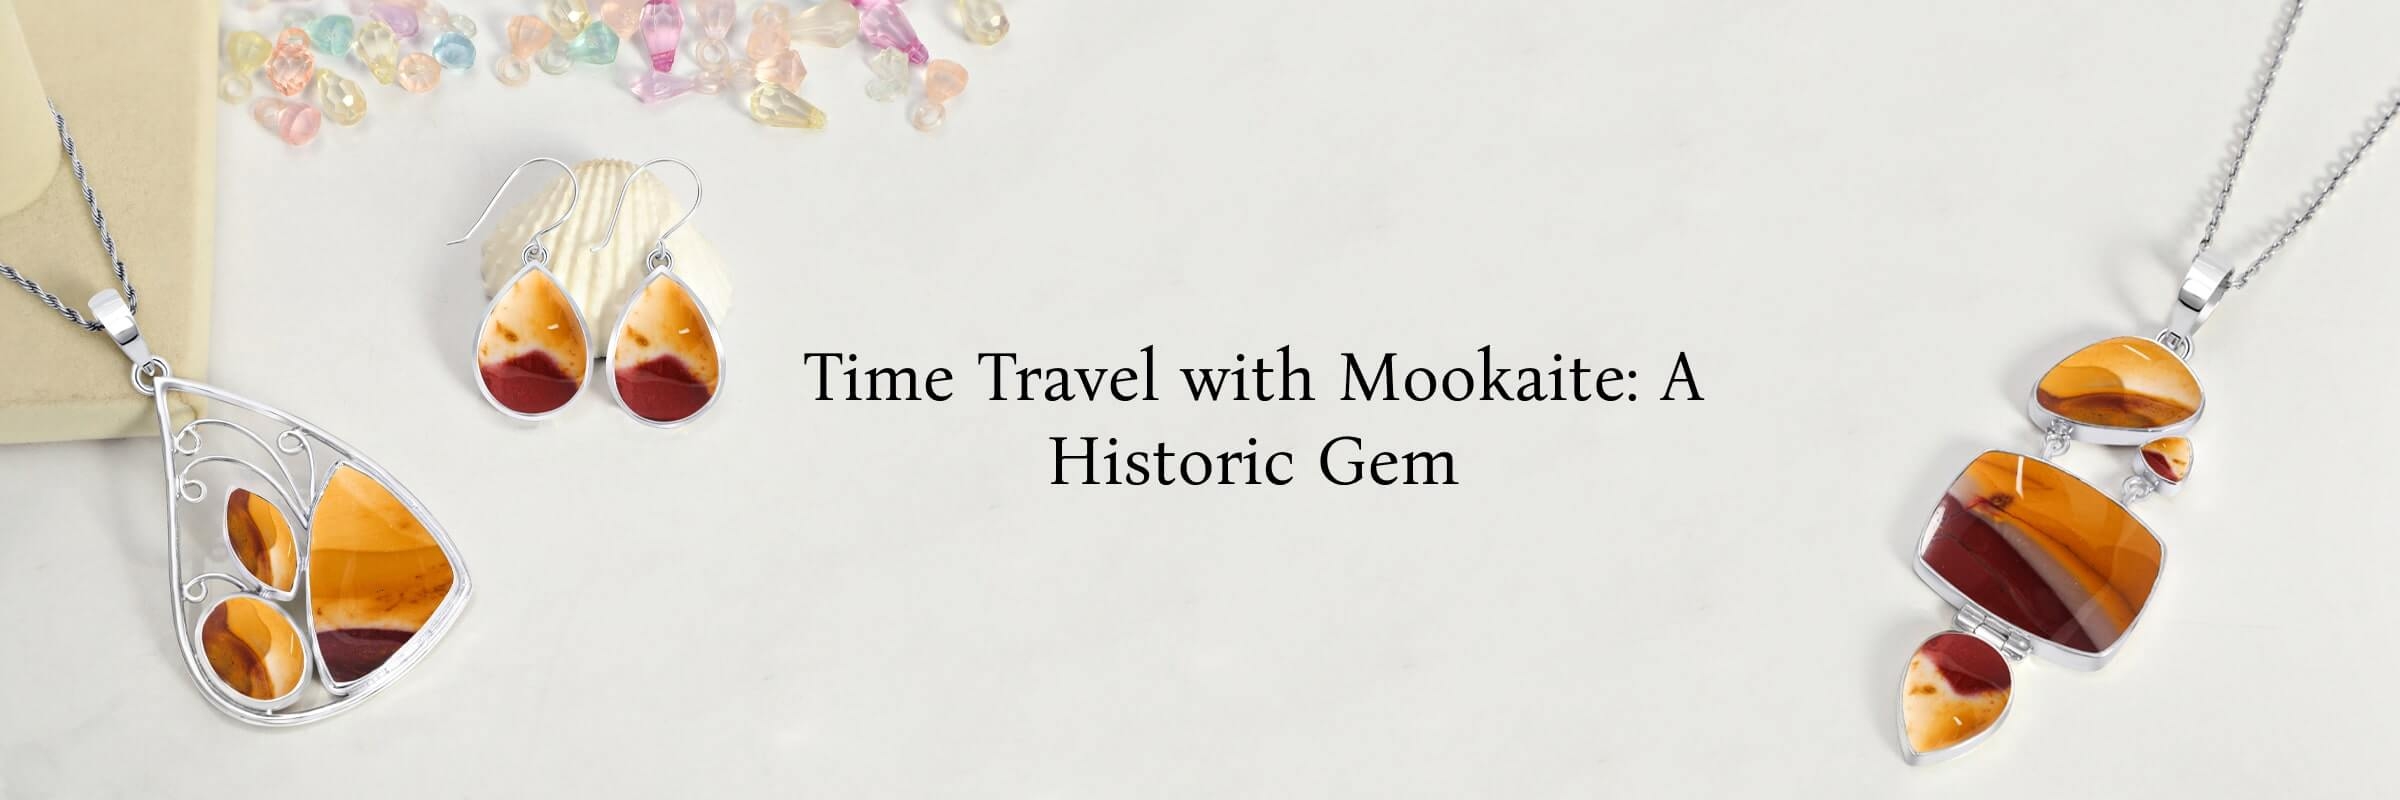 History of Mookaite Stone